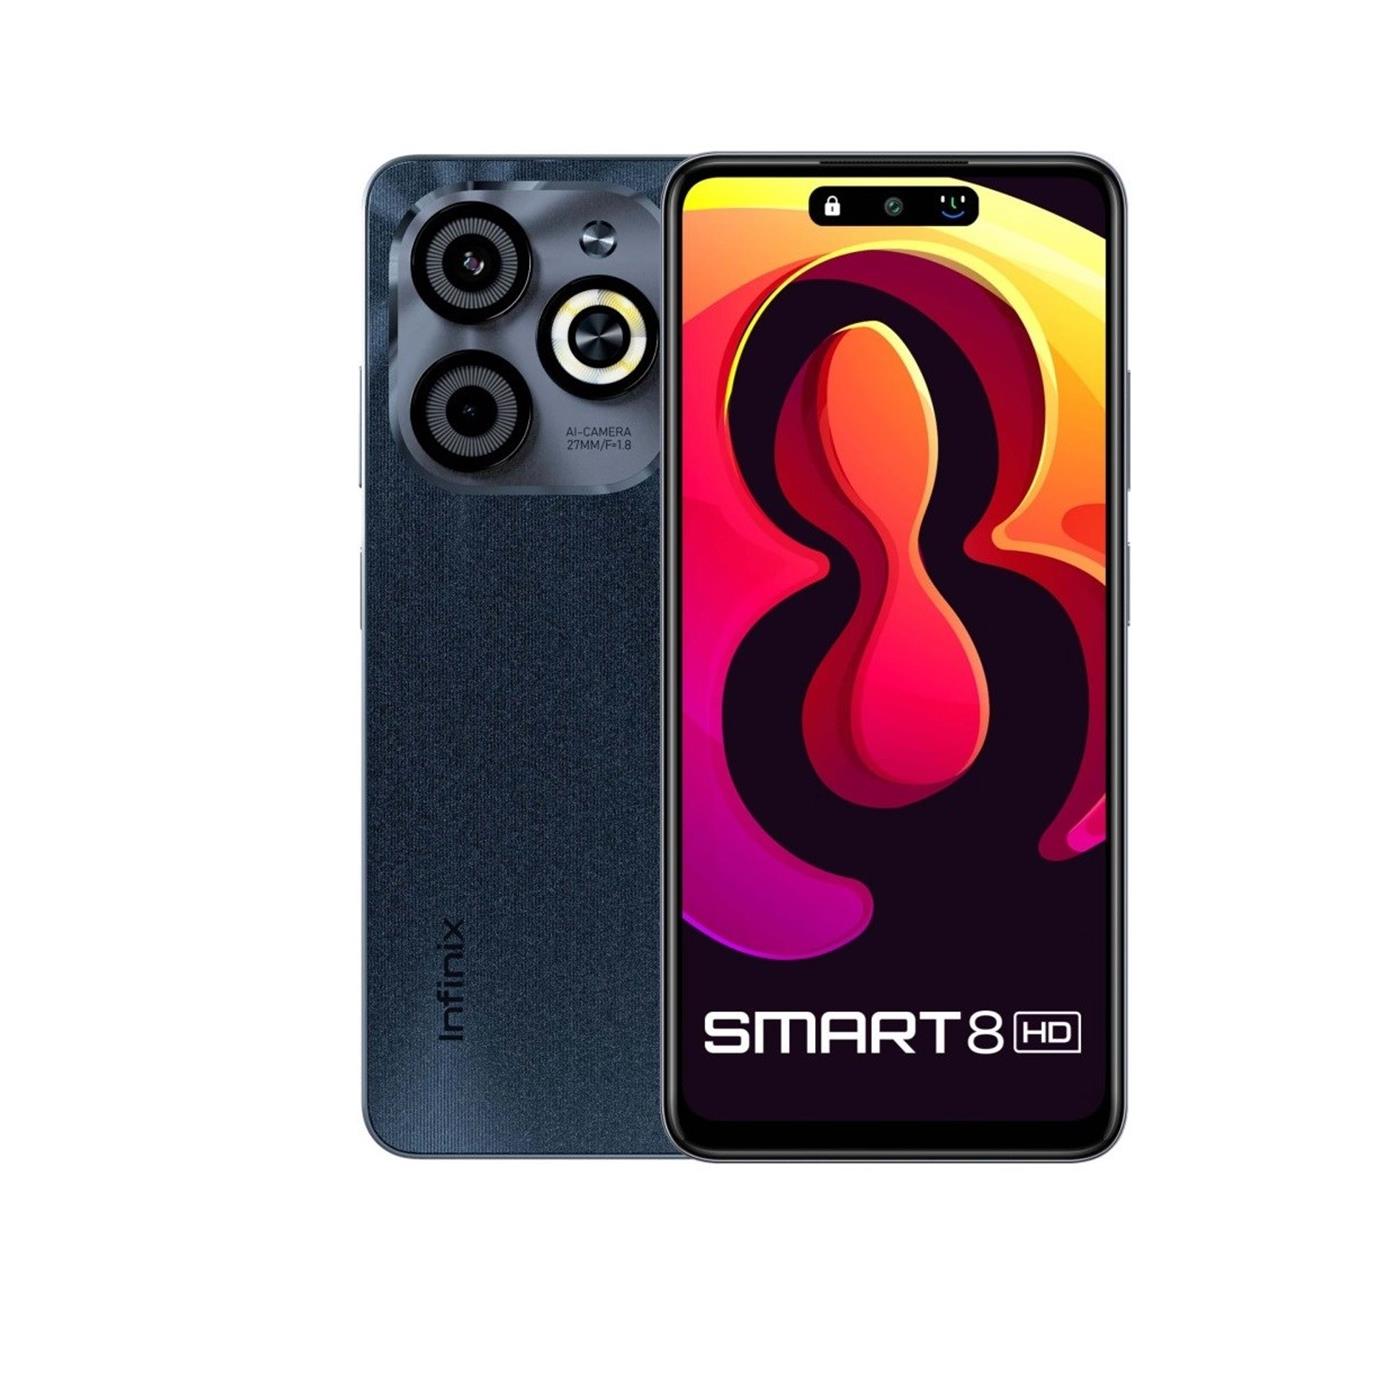 Infinix Smart 8 HD Soft Reset